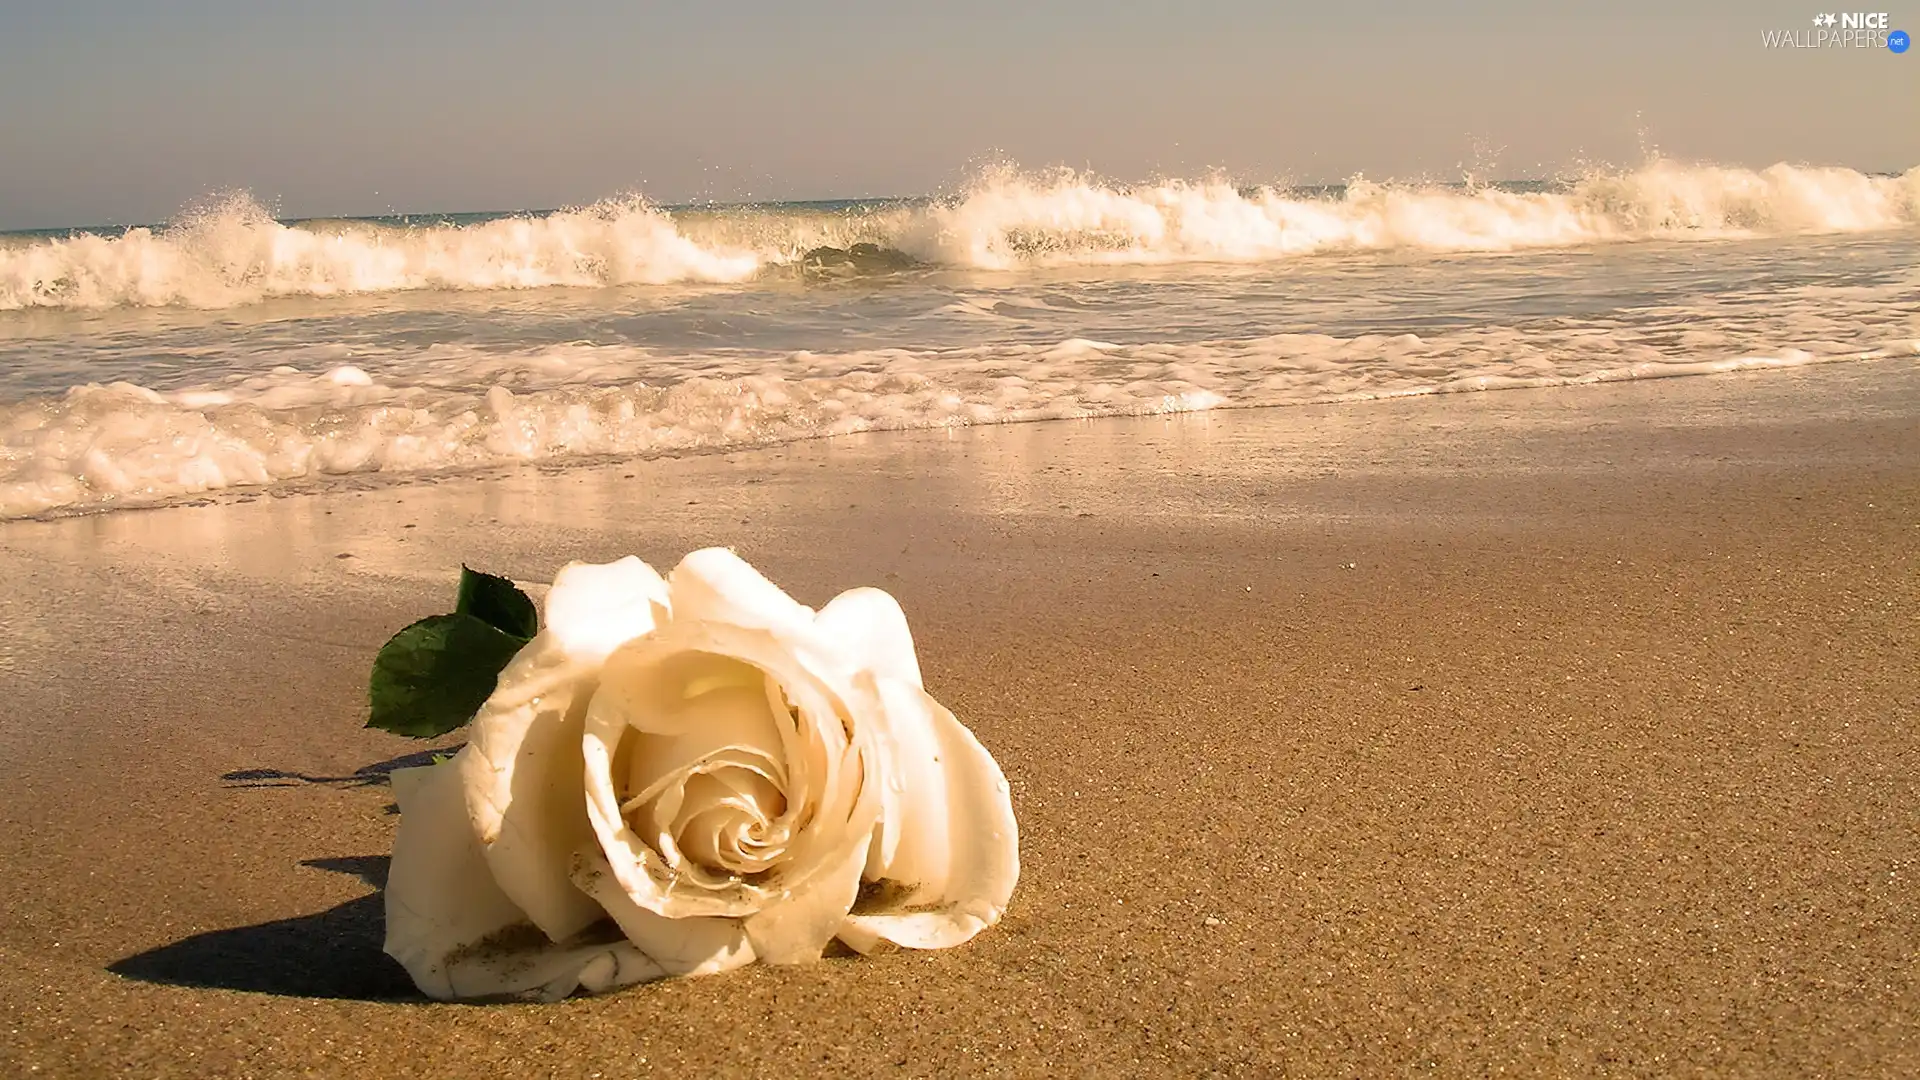 Beaches, Waves, rose